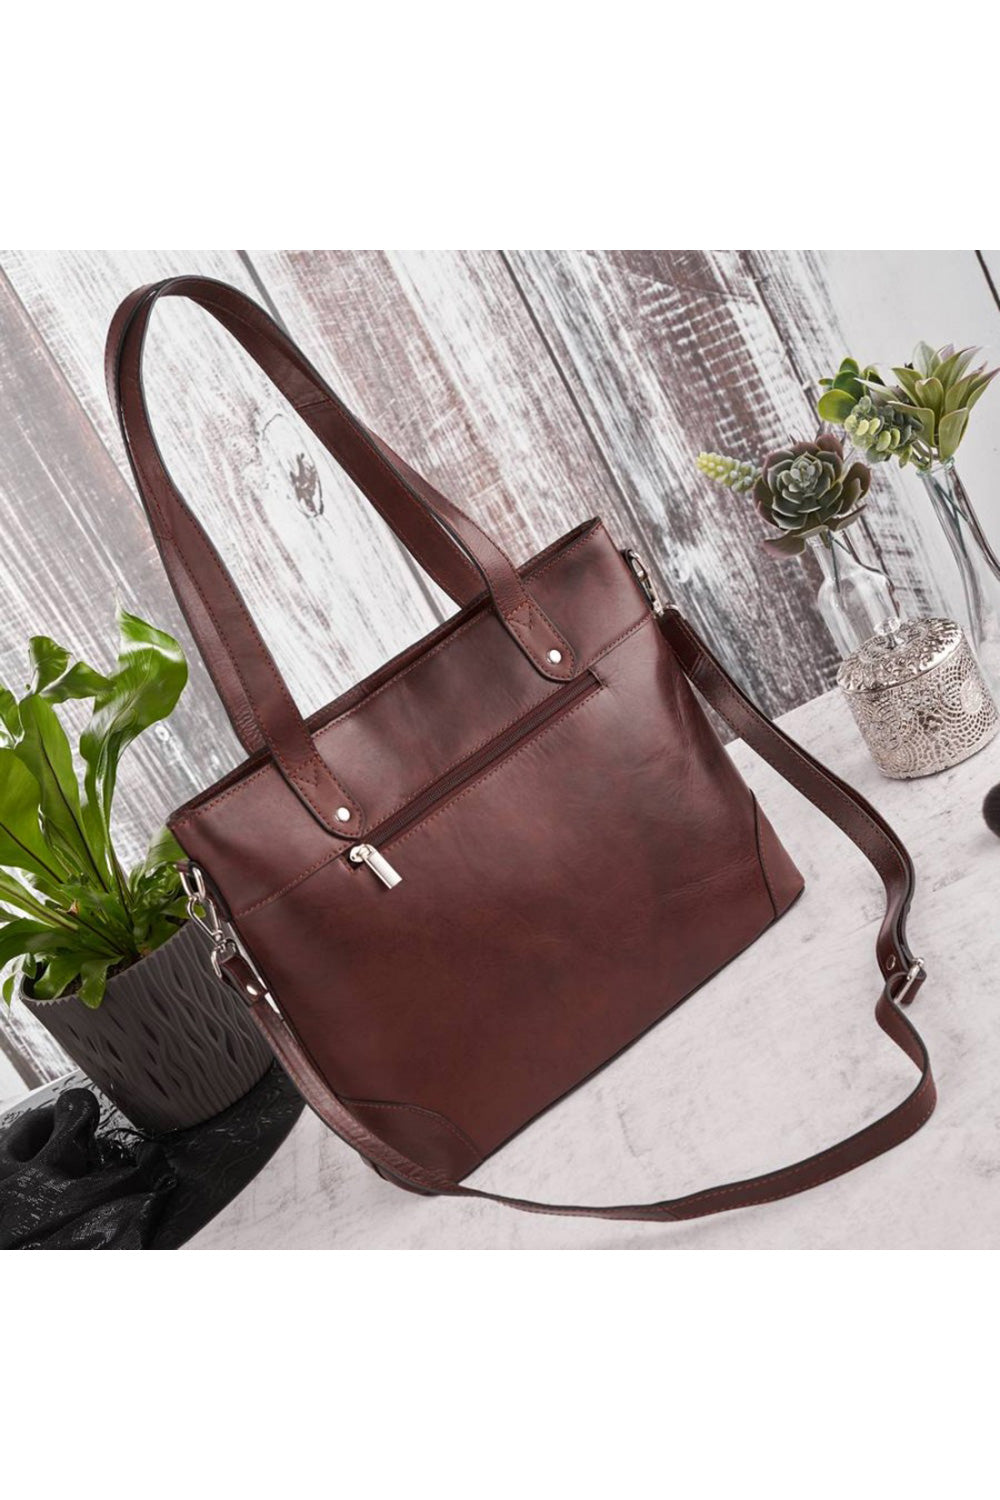 Natural leather bag model 173200 Elsy Style Casual Handbags, Shoulder Bags